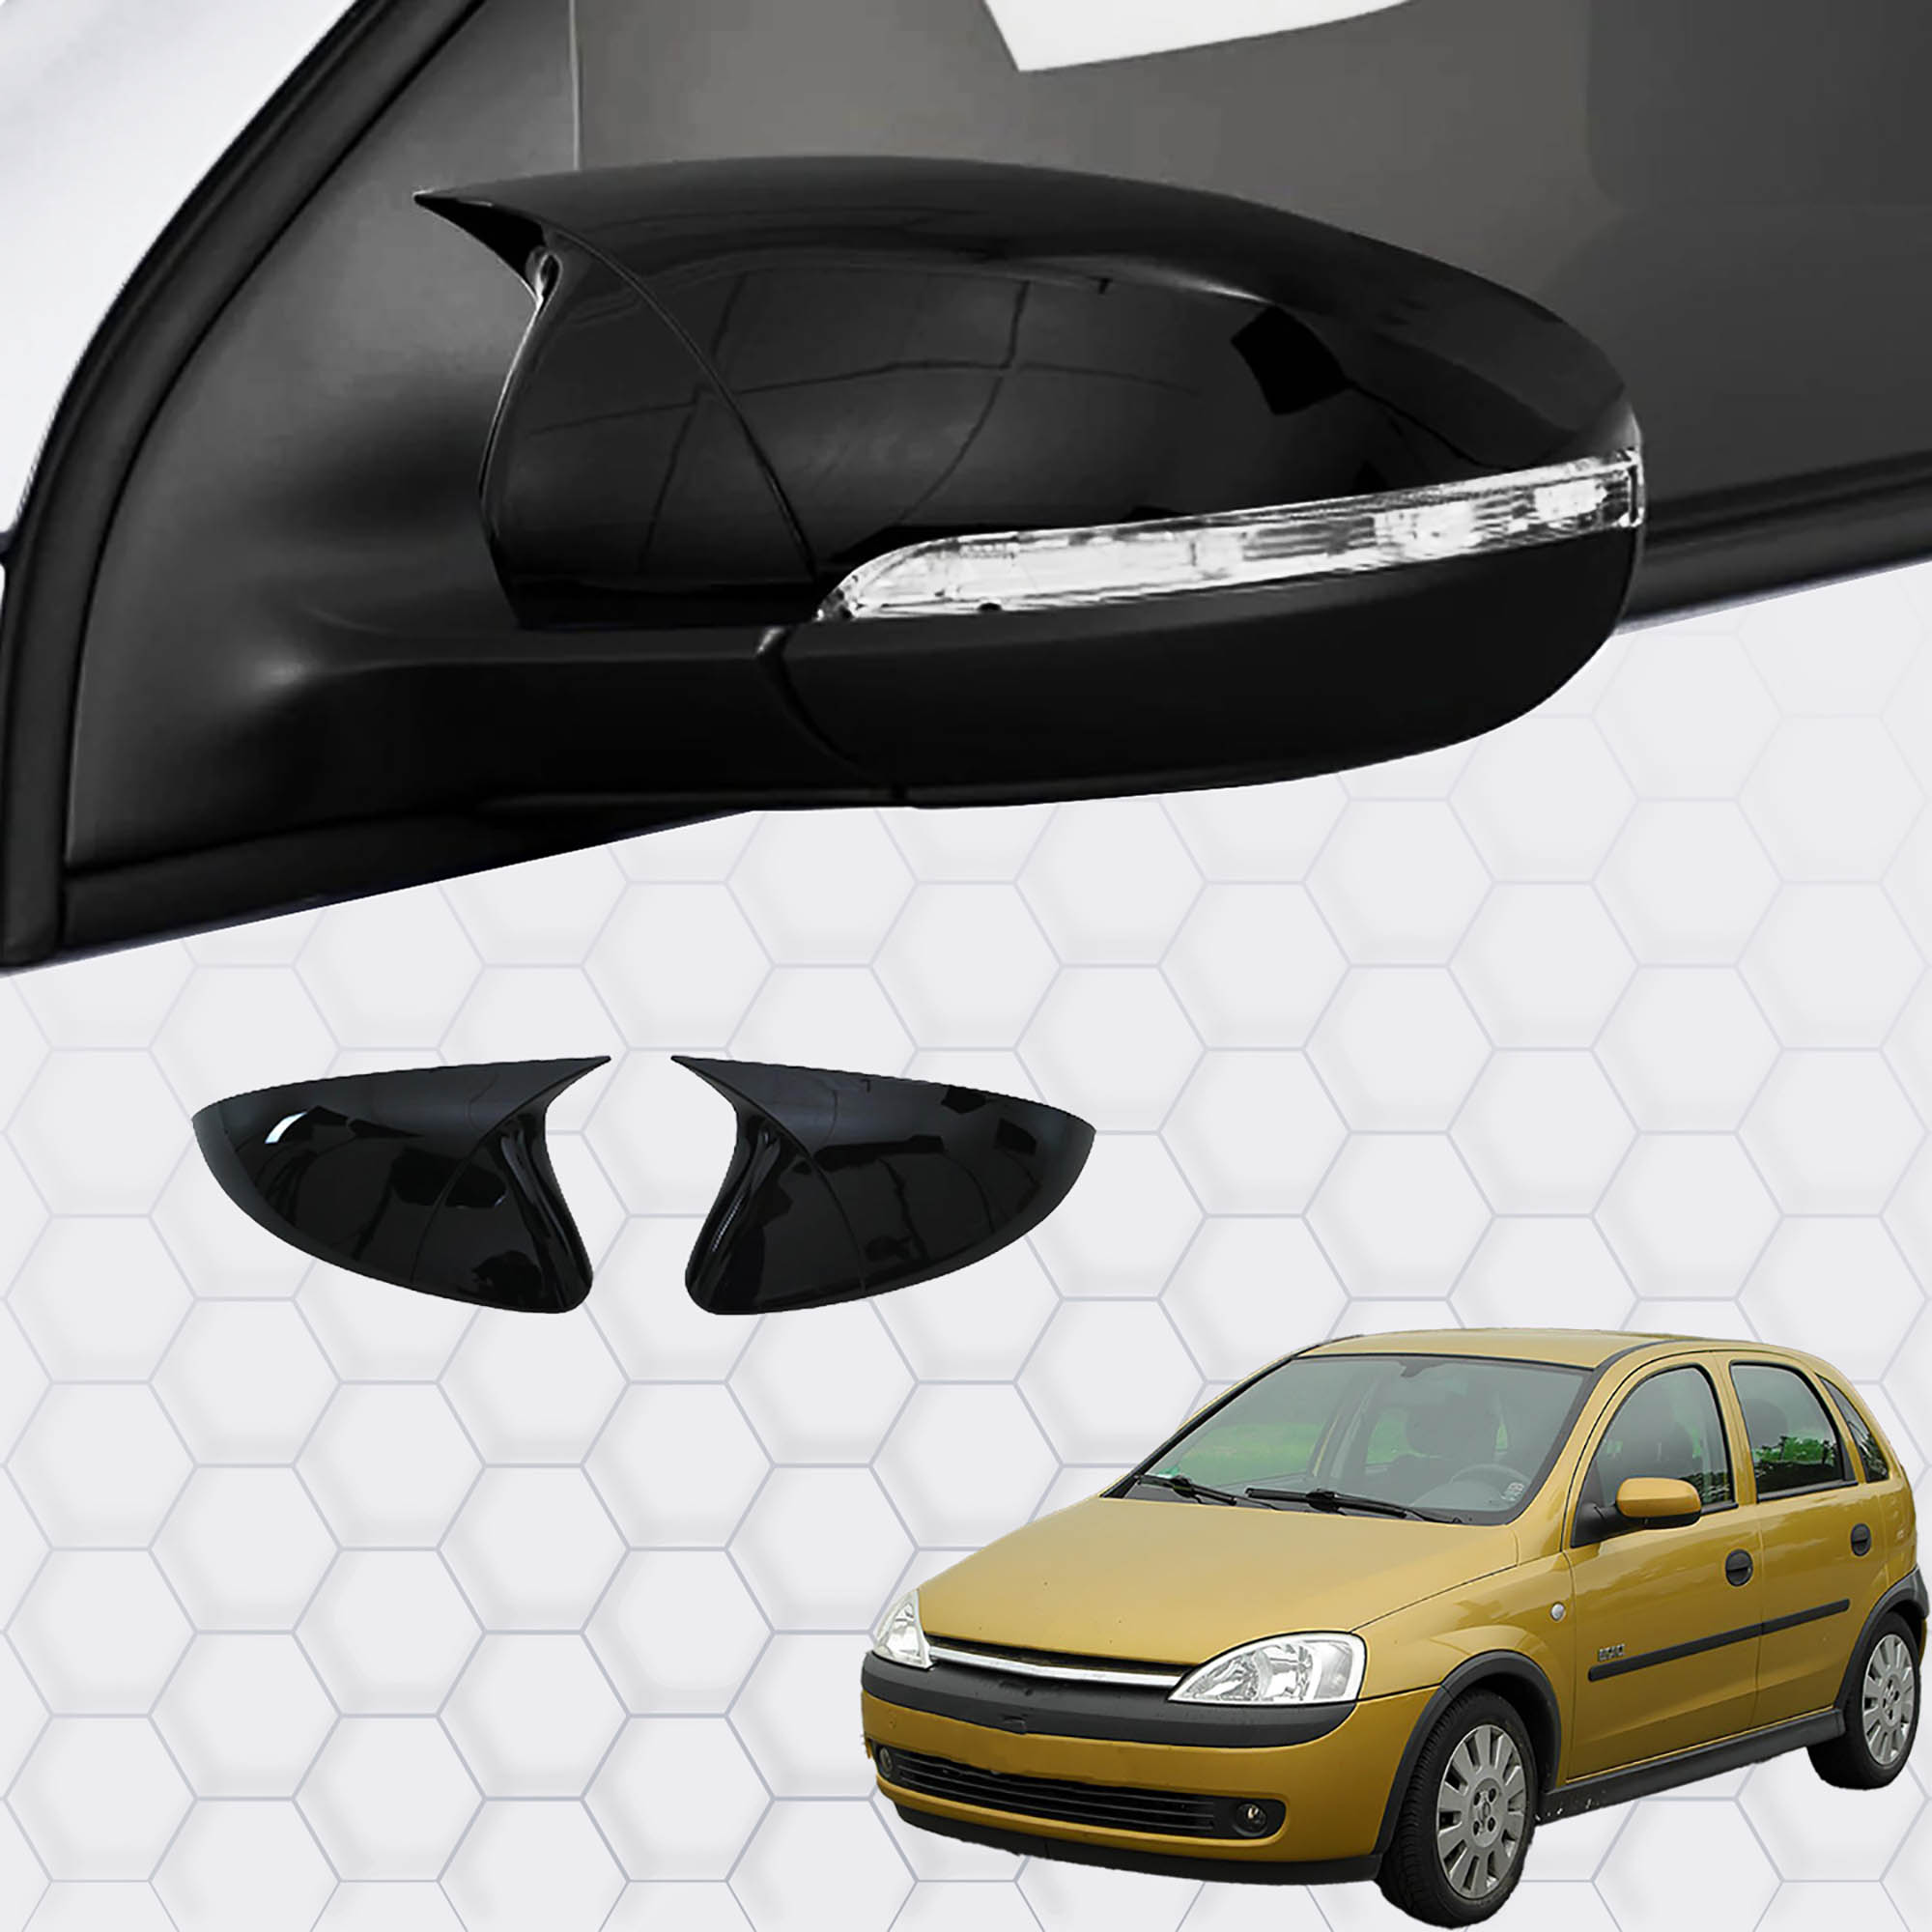 Opel Corsa C (2000-2006) - Ayna Kapağı (Yarasa) Piano Siyah Abs (Hb 5D-3D)